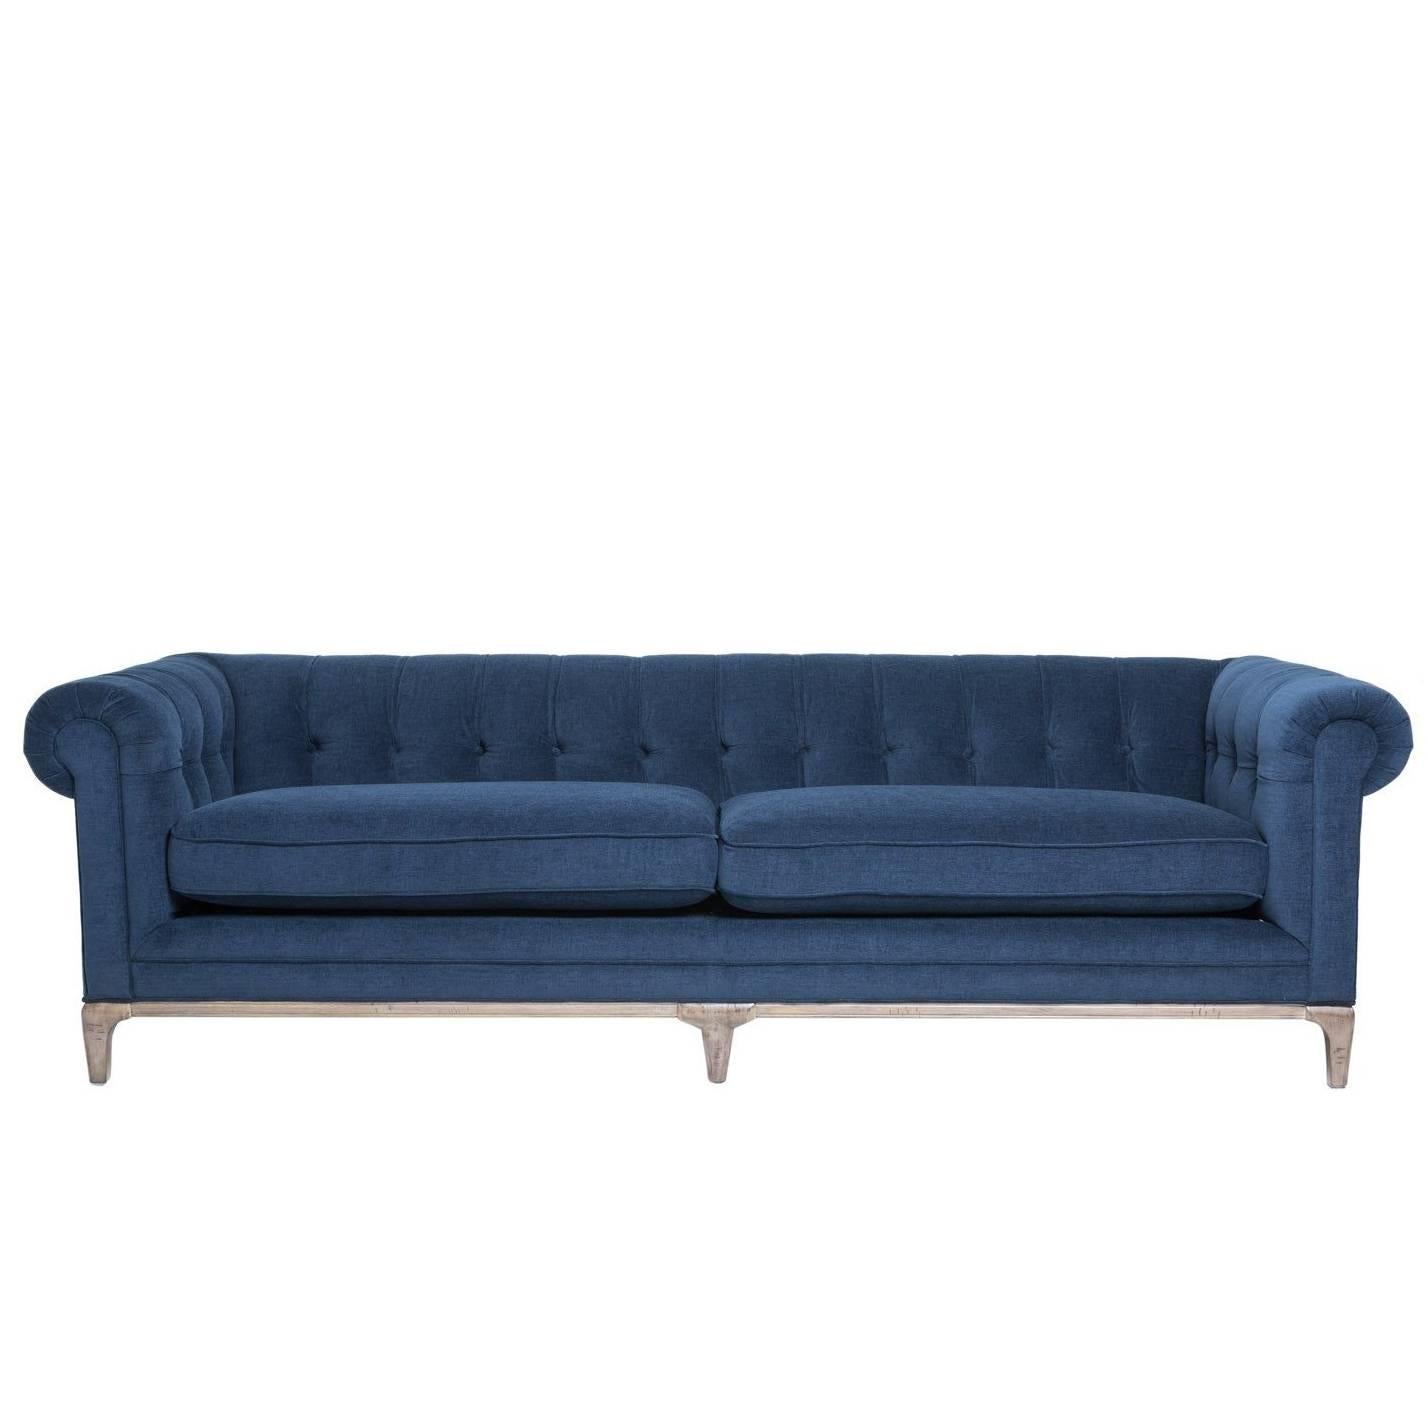 The Morgan Sofa For Sale